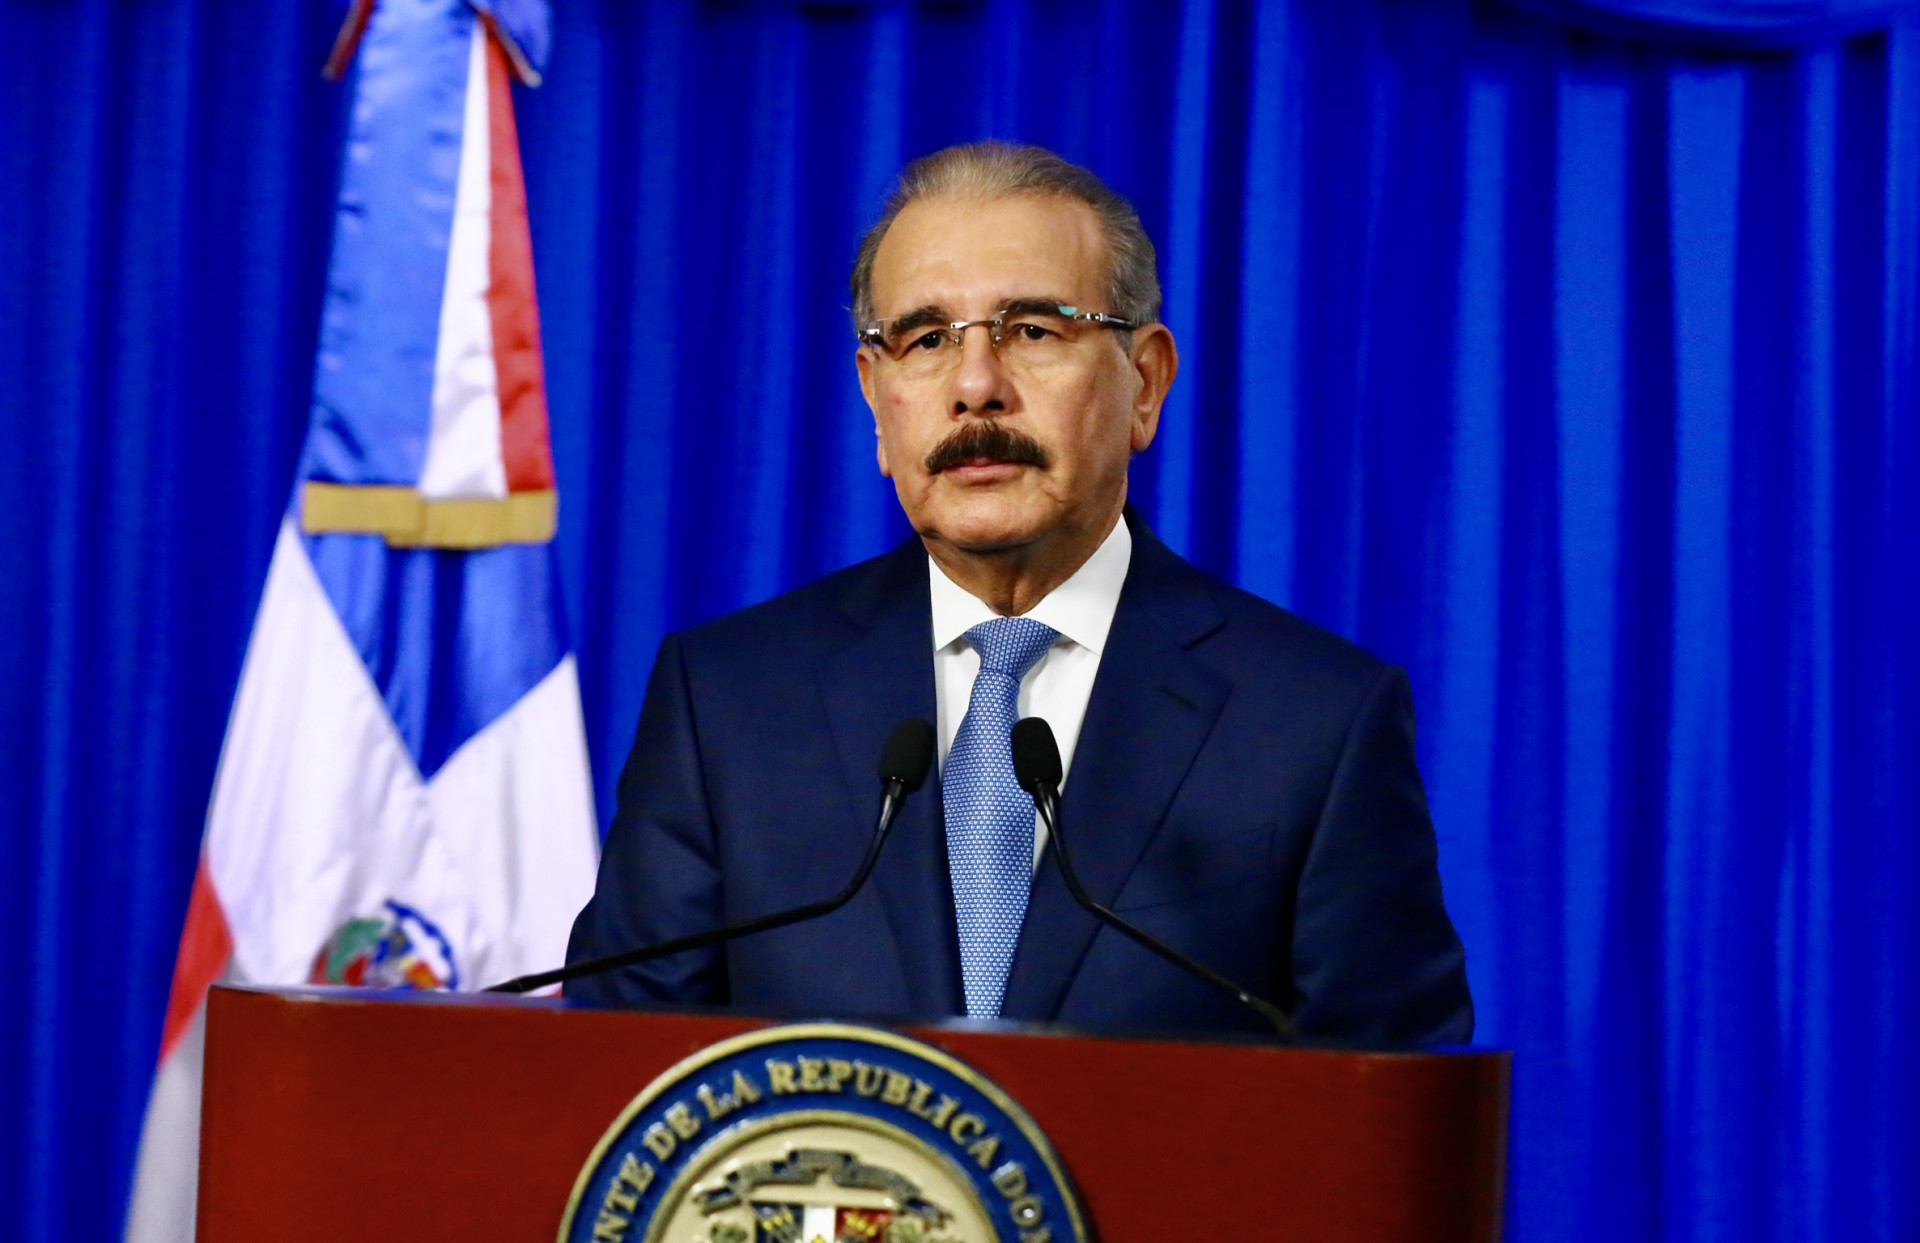 REPÚBLICA DOMINICANA: Presidente Danilo Medina anuncia medidas garantizarán detección temprana de coronavirus, así como total cobertura y atención a enfermos